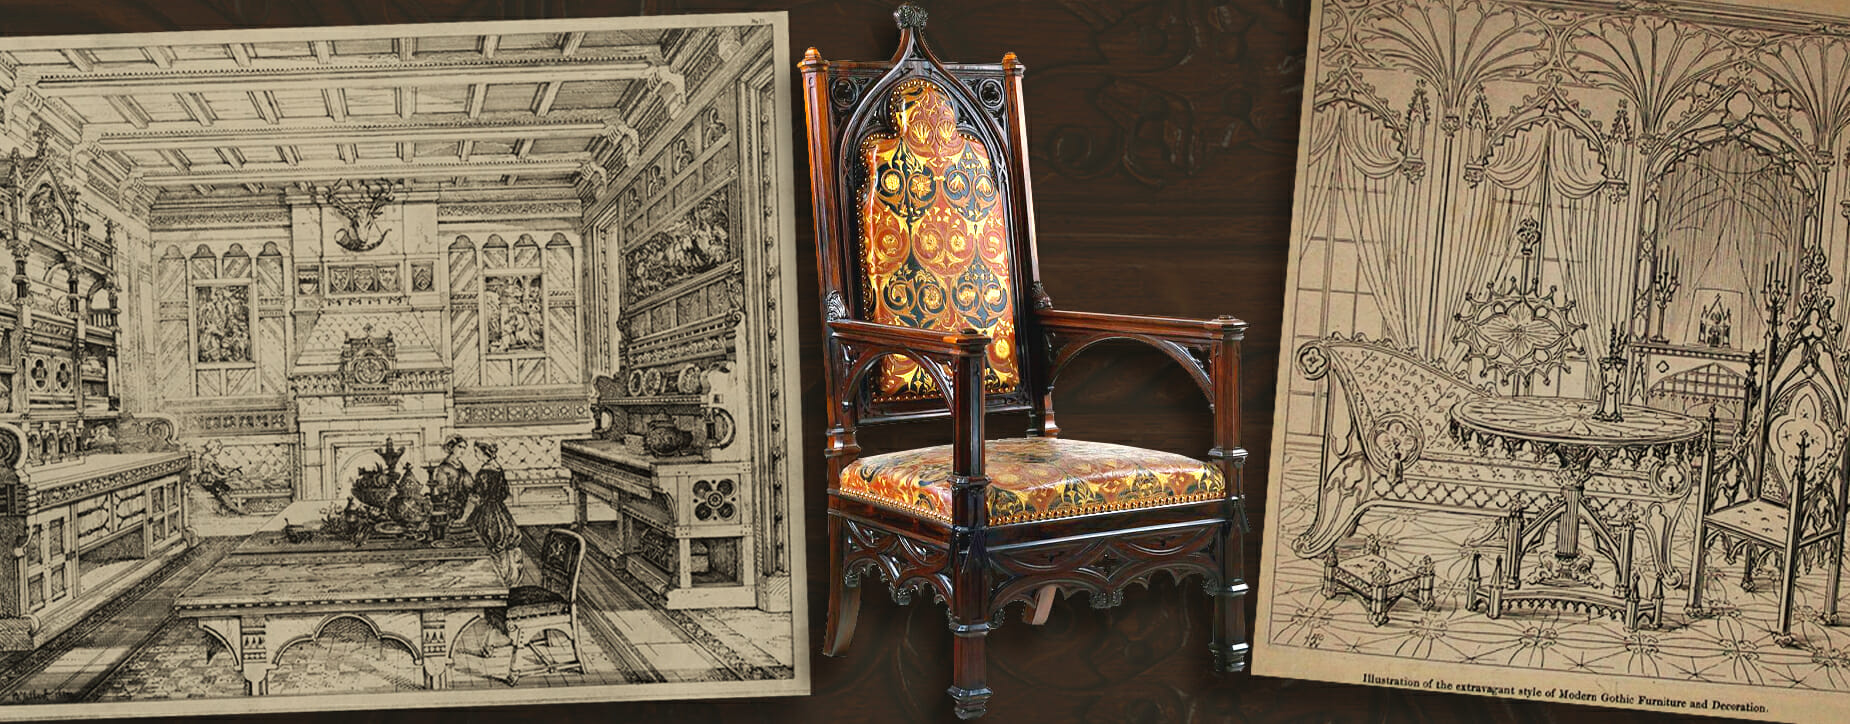 Gothic Revival Furniture 19th century